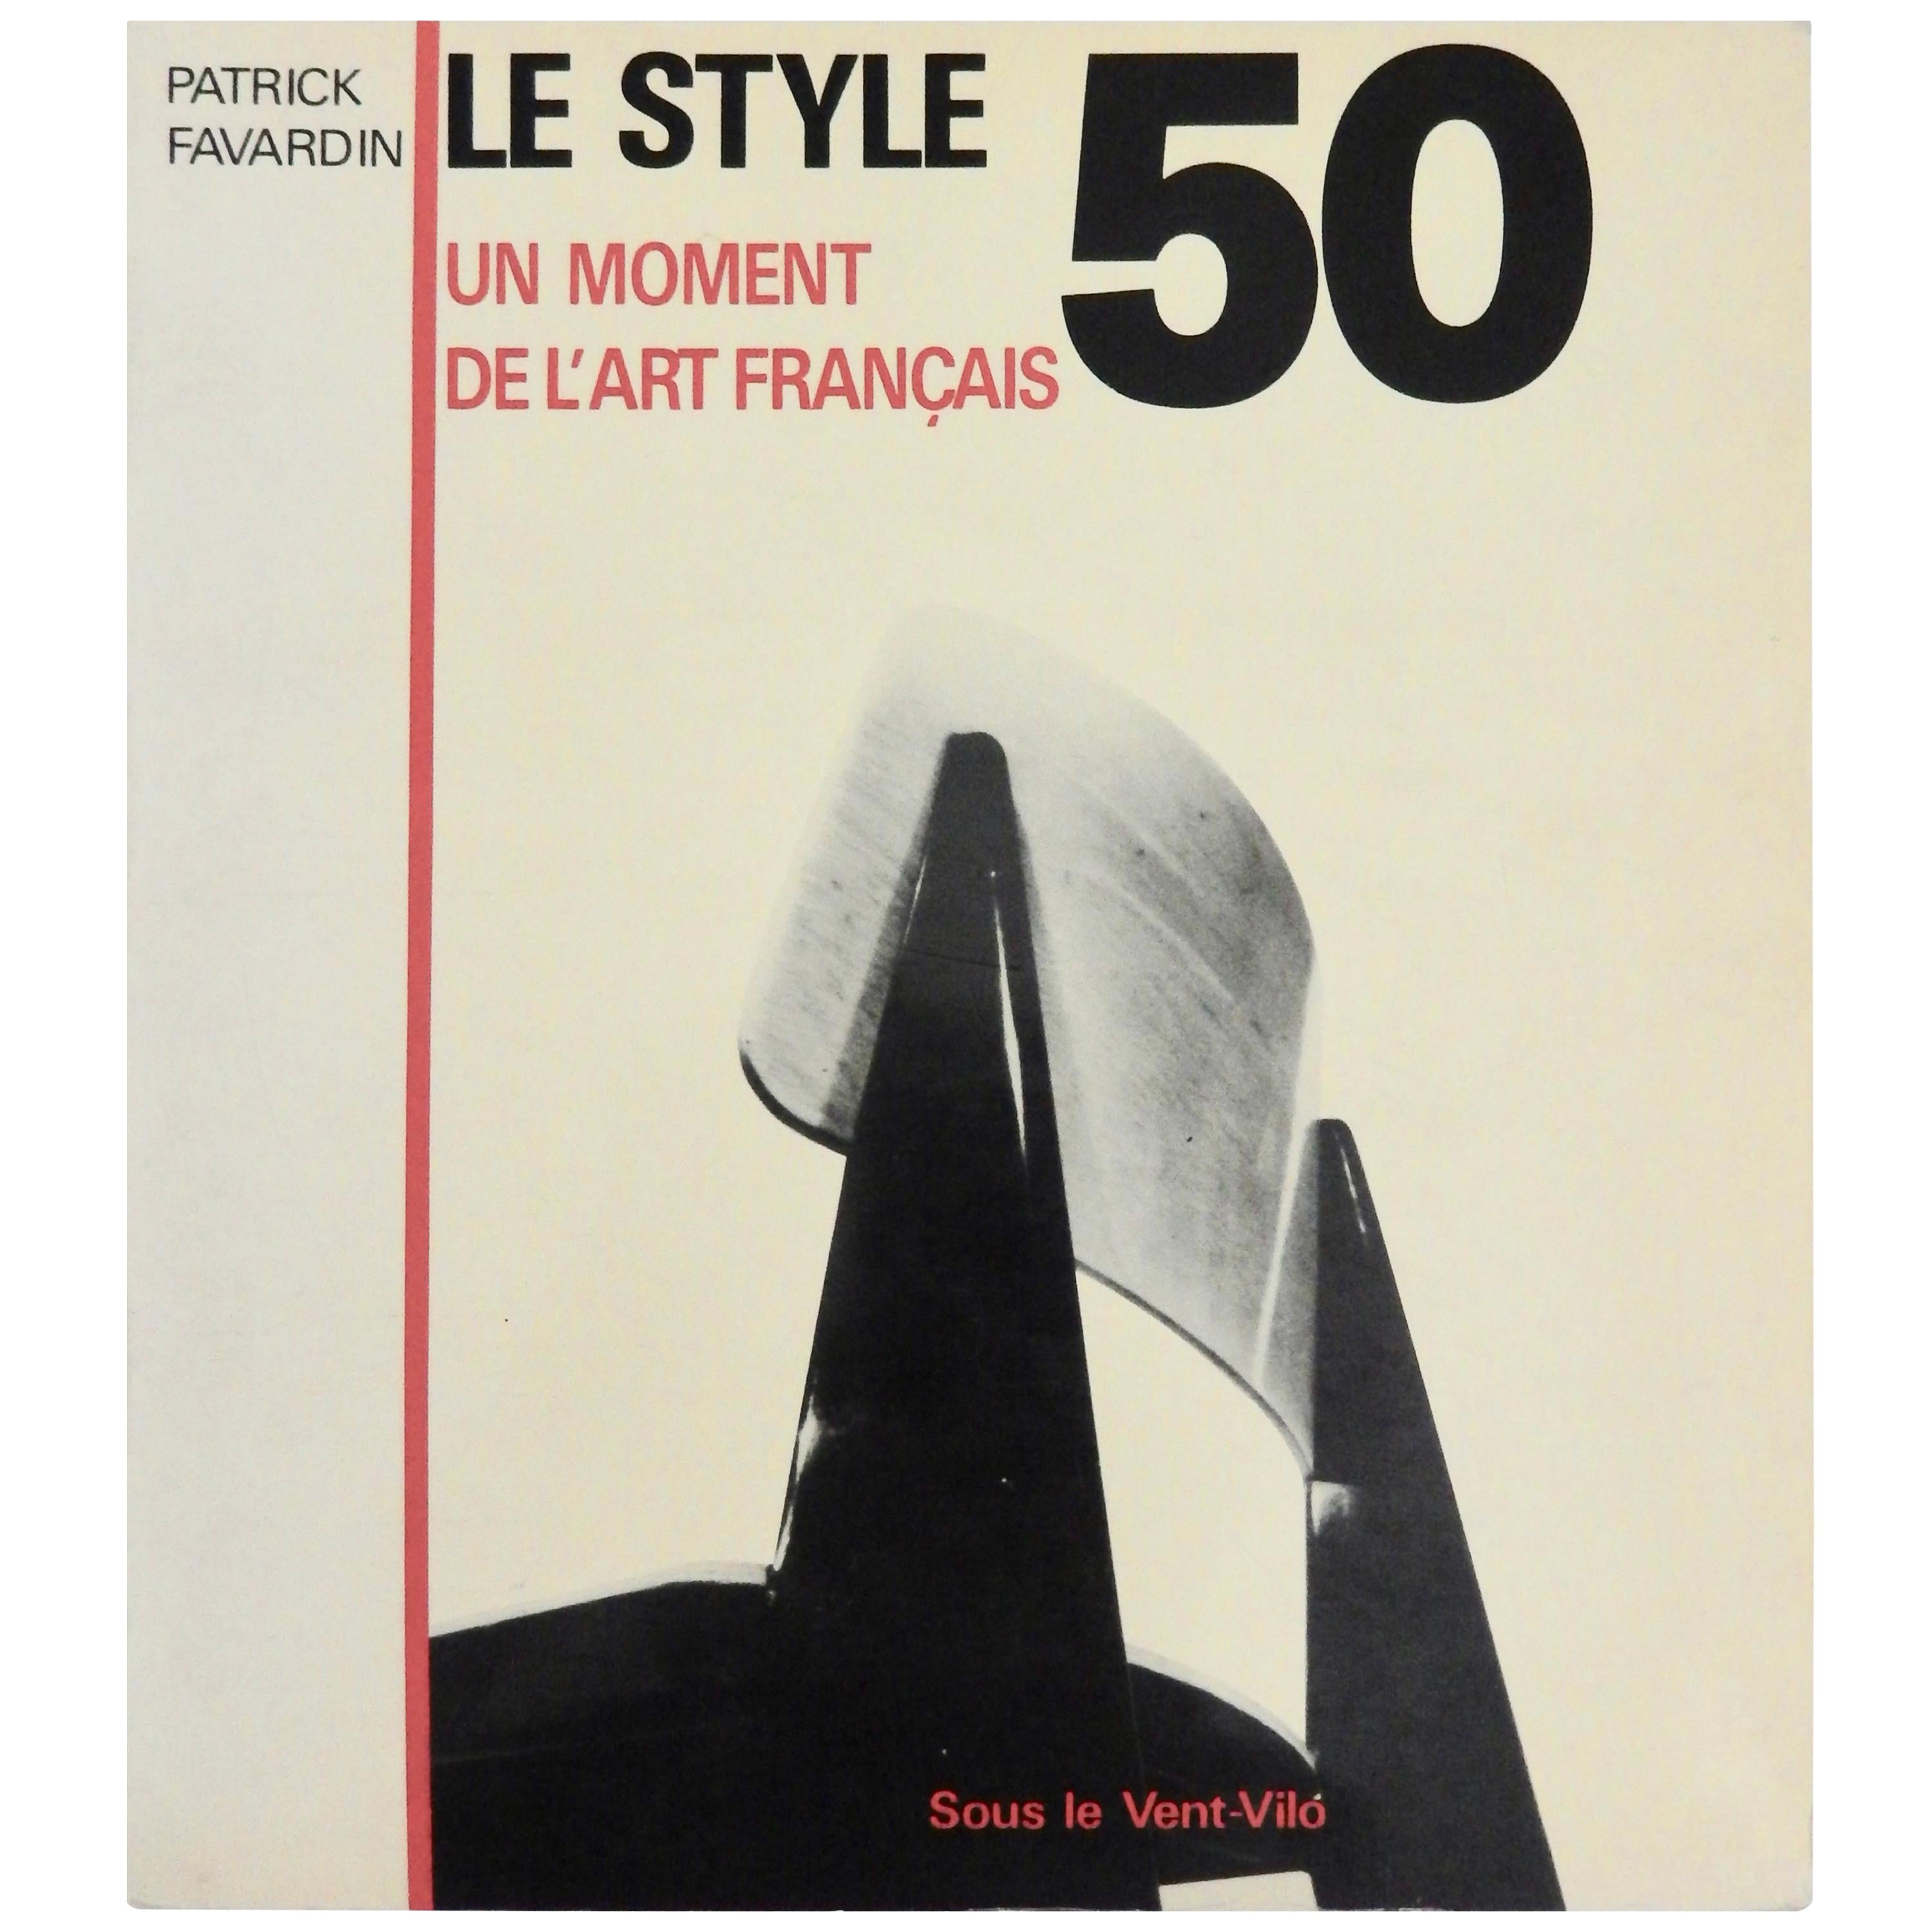 Patrick Favardin's Le Style 50, Midcentury French Decorative Arts Catalog